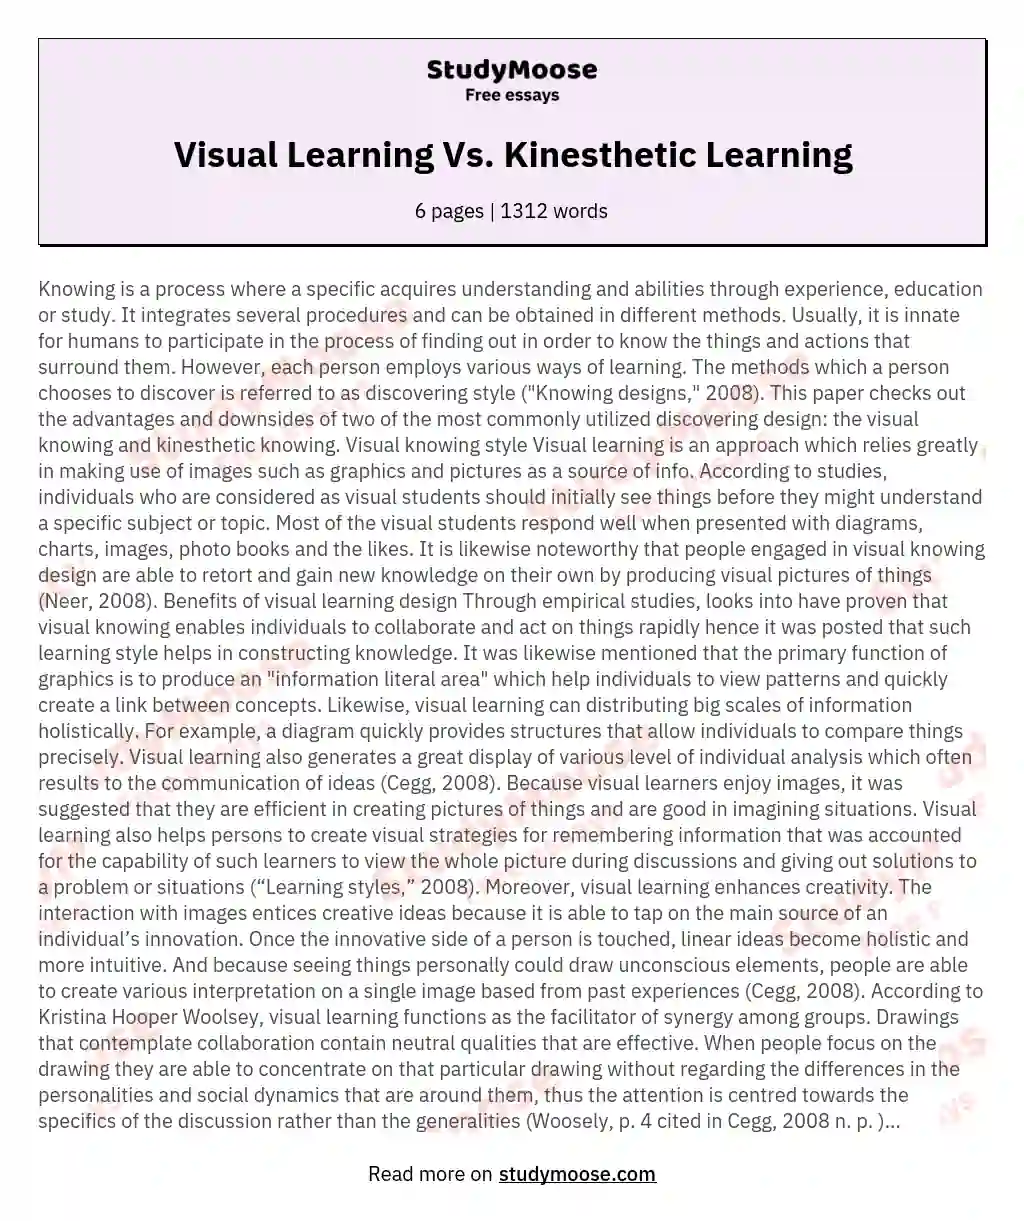 visual learner essay